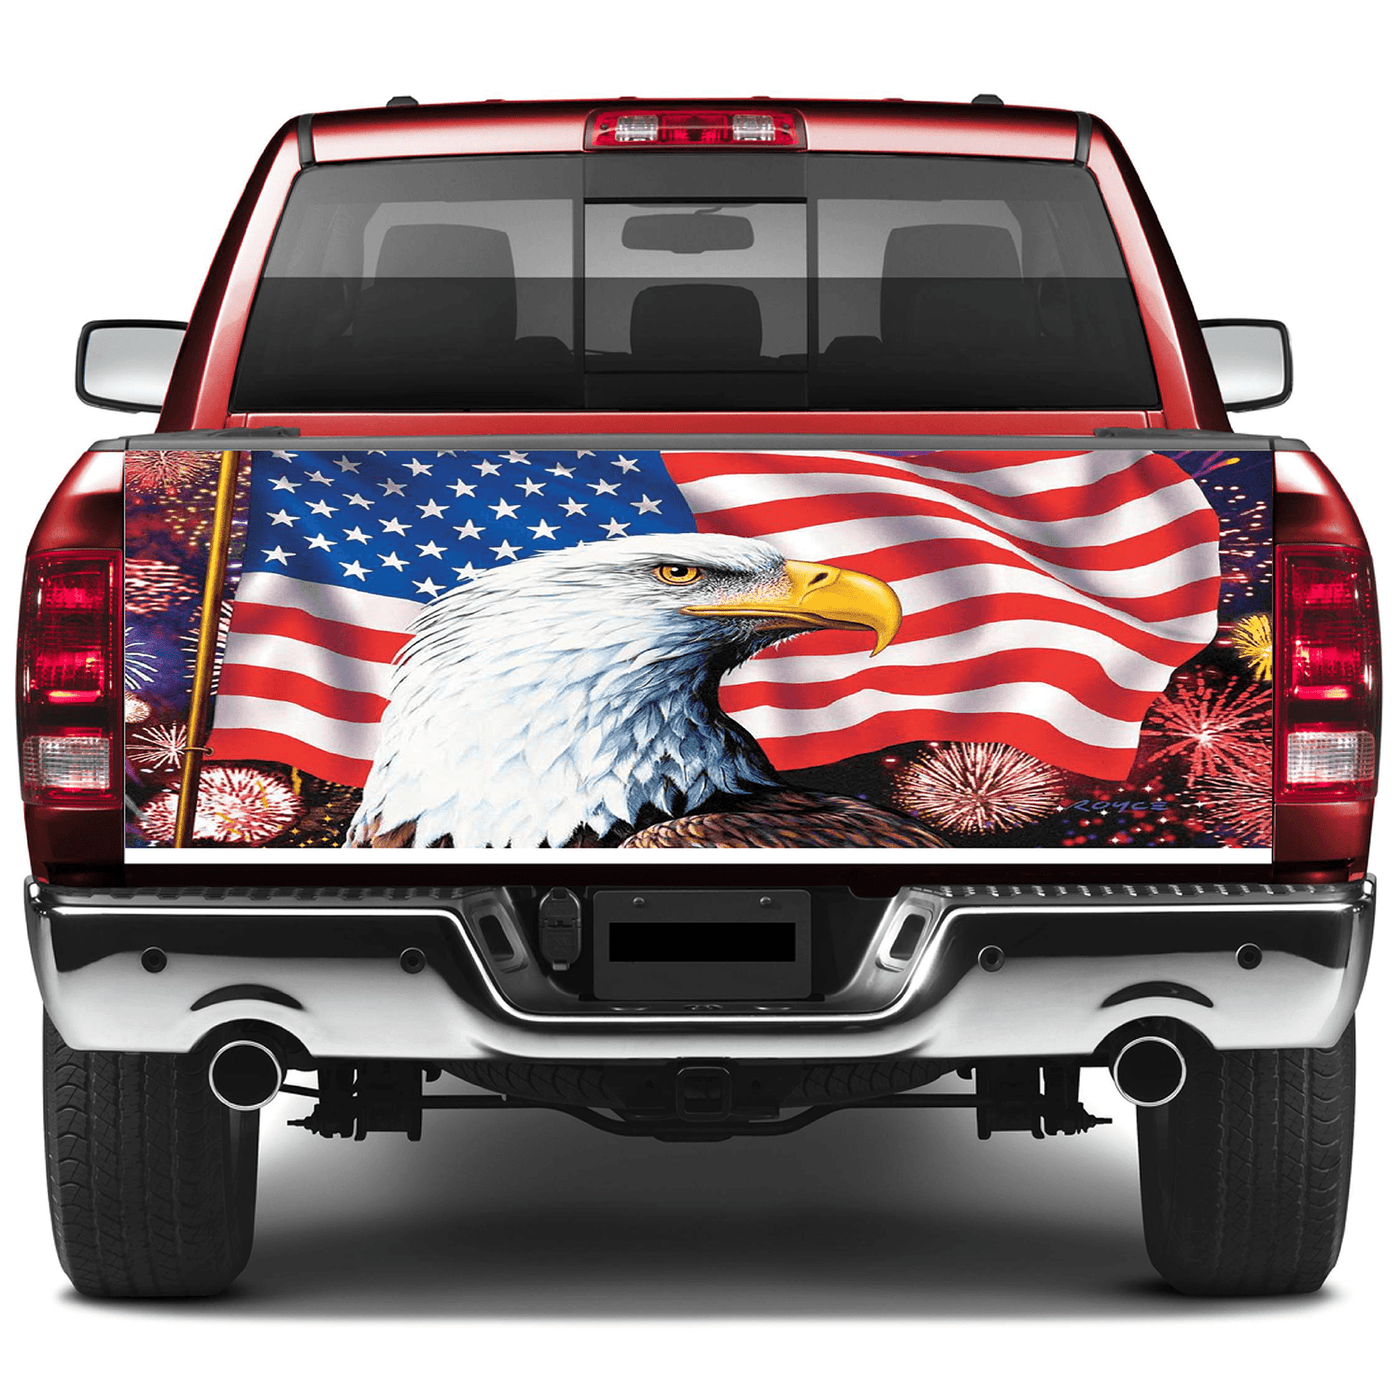 Tailgate Wraps For Trucks Wrap Vinyl Car Decals American Symbols Bald Eagle Statue Us SUV Car Sticker